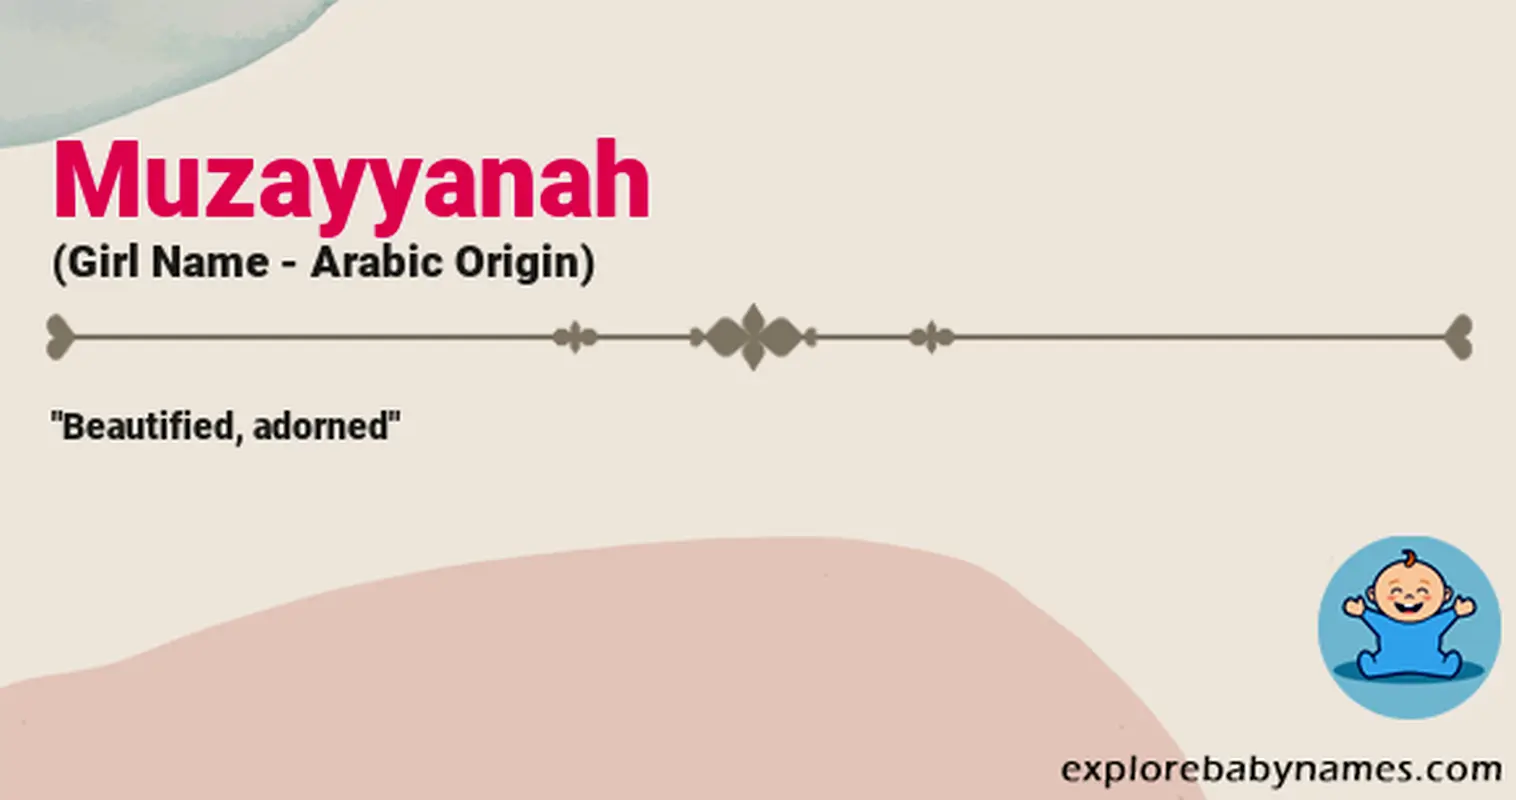 Meaning of Muzayyanah